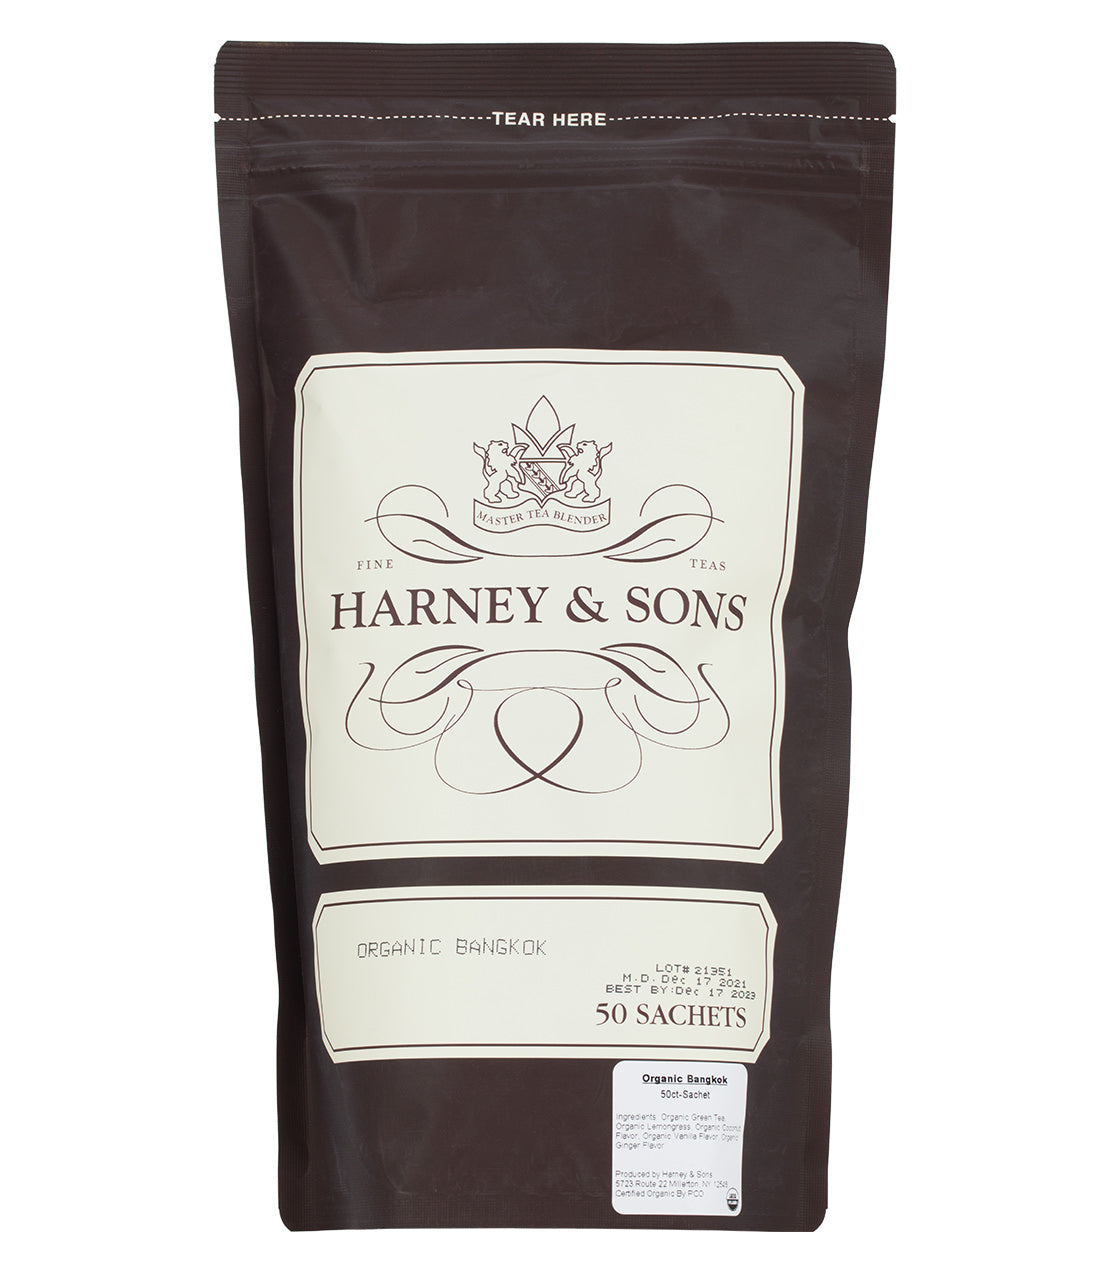 Organic Bangkok (Green Tea with Coconut, Ginger and Vanilla) - Sachets Bag of 50 Sachets - Harney & Sons Fine Teas